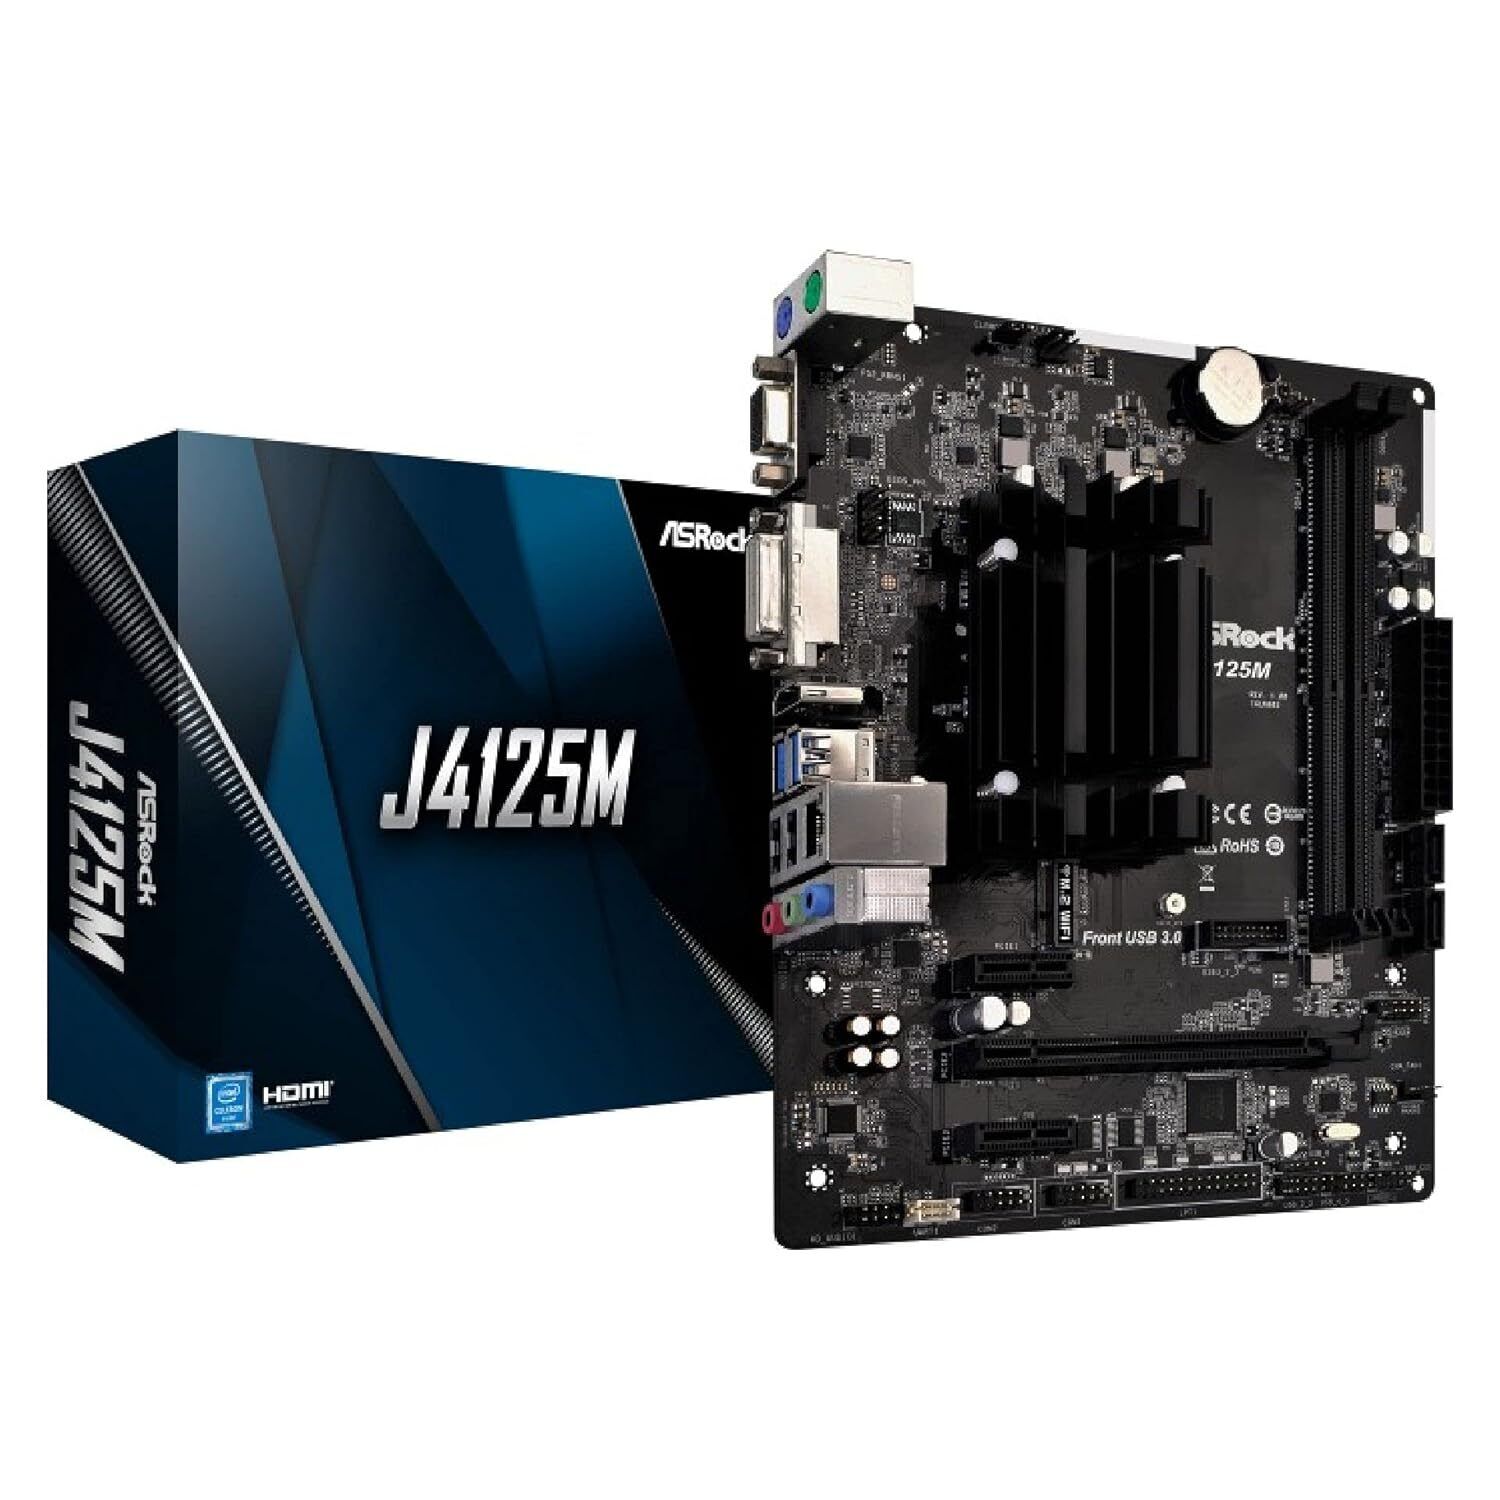 ASRock J4125M Intel Quad-Core Processor J4125 (Up to 2.7 GHz) Motherboard